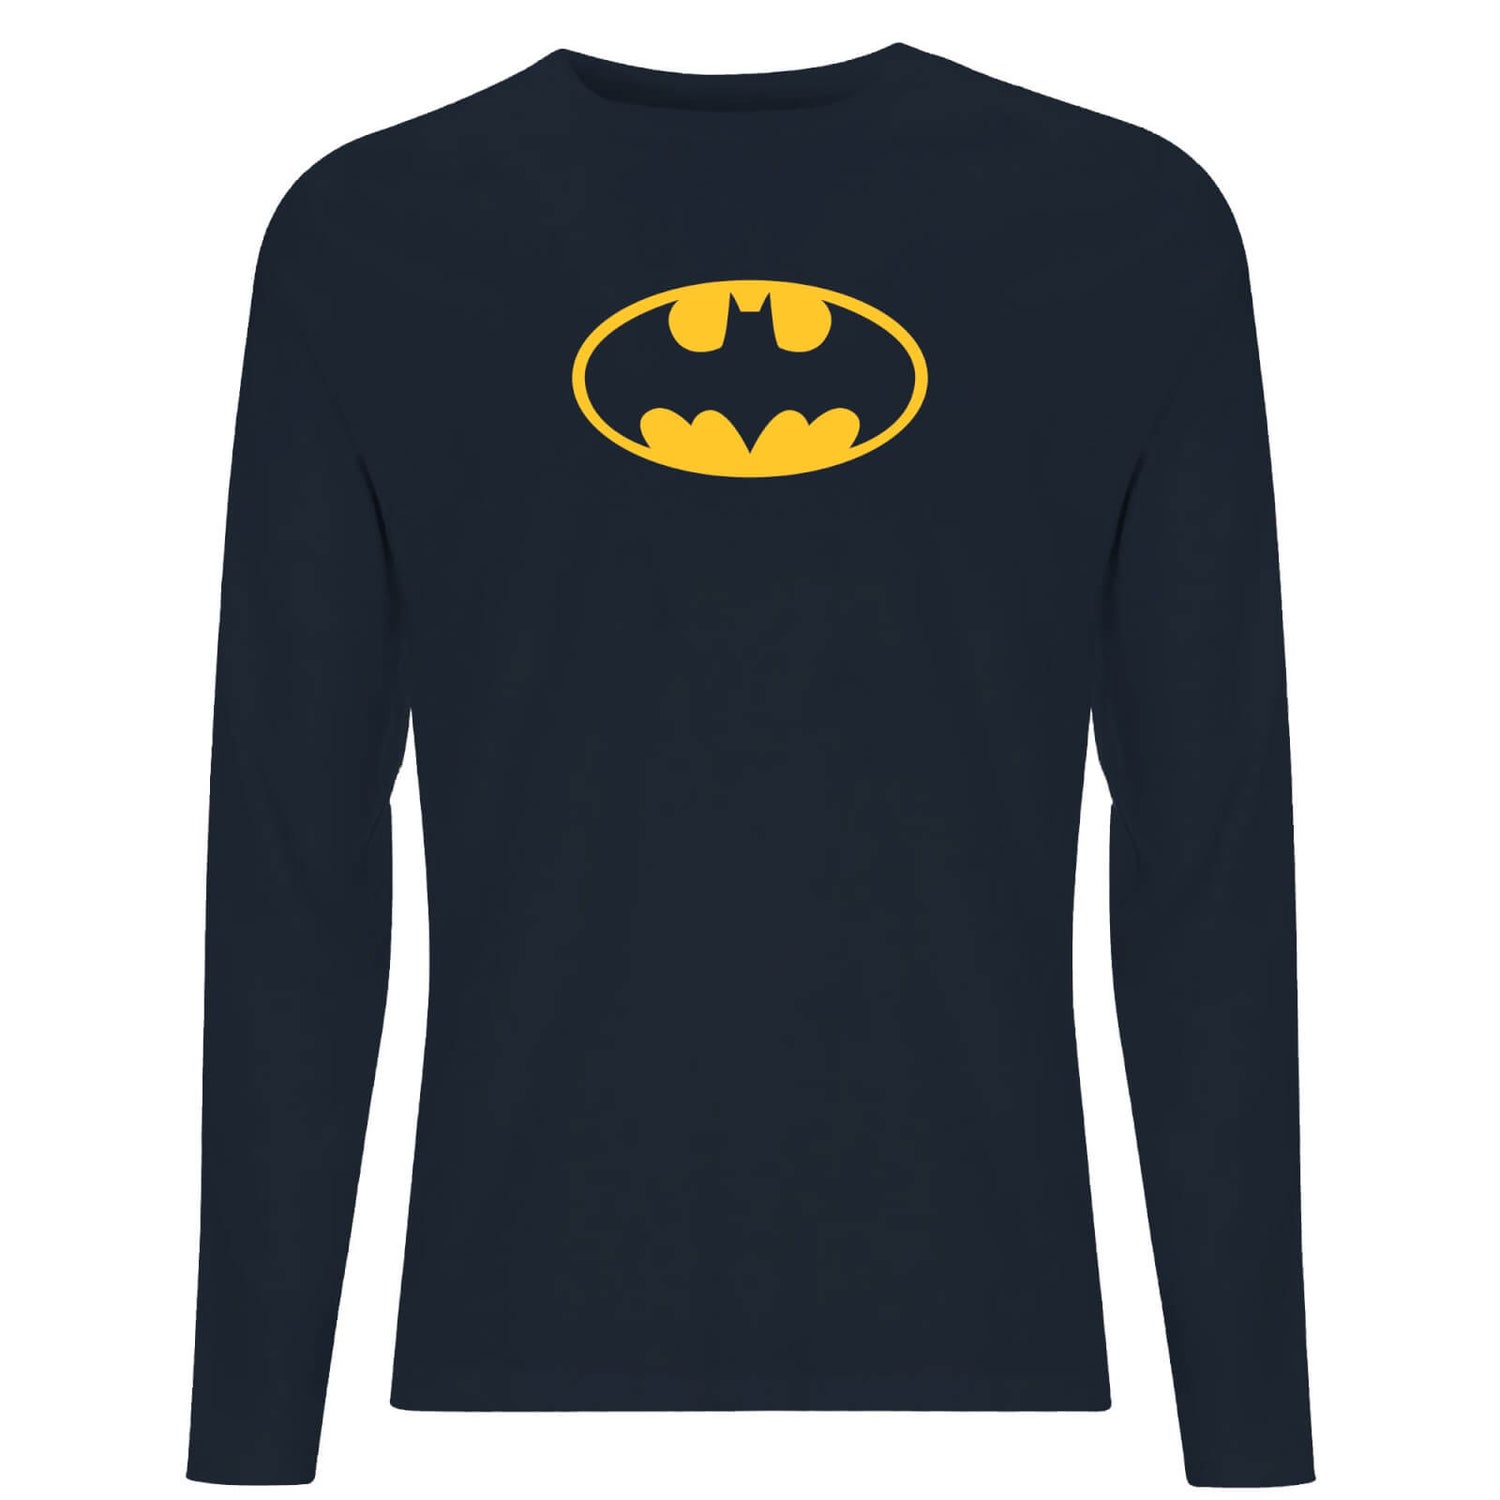 Justice League Batman Logo Men's Long Sleeve T-Shirt - Navy